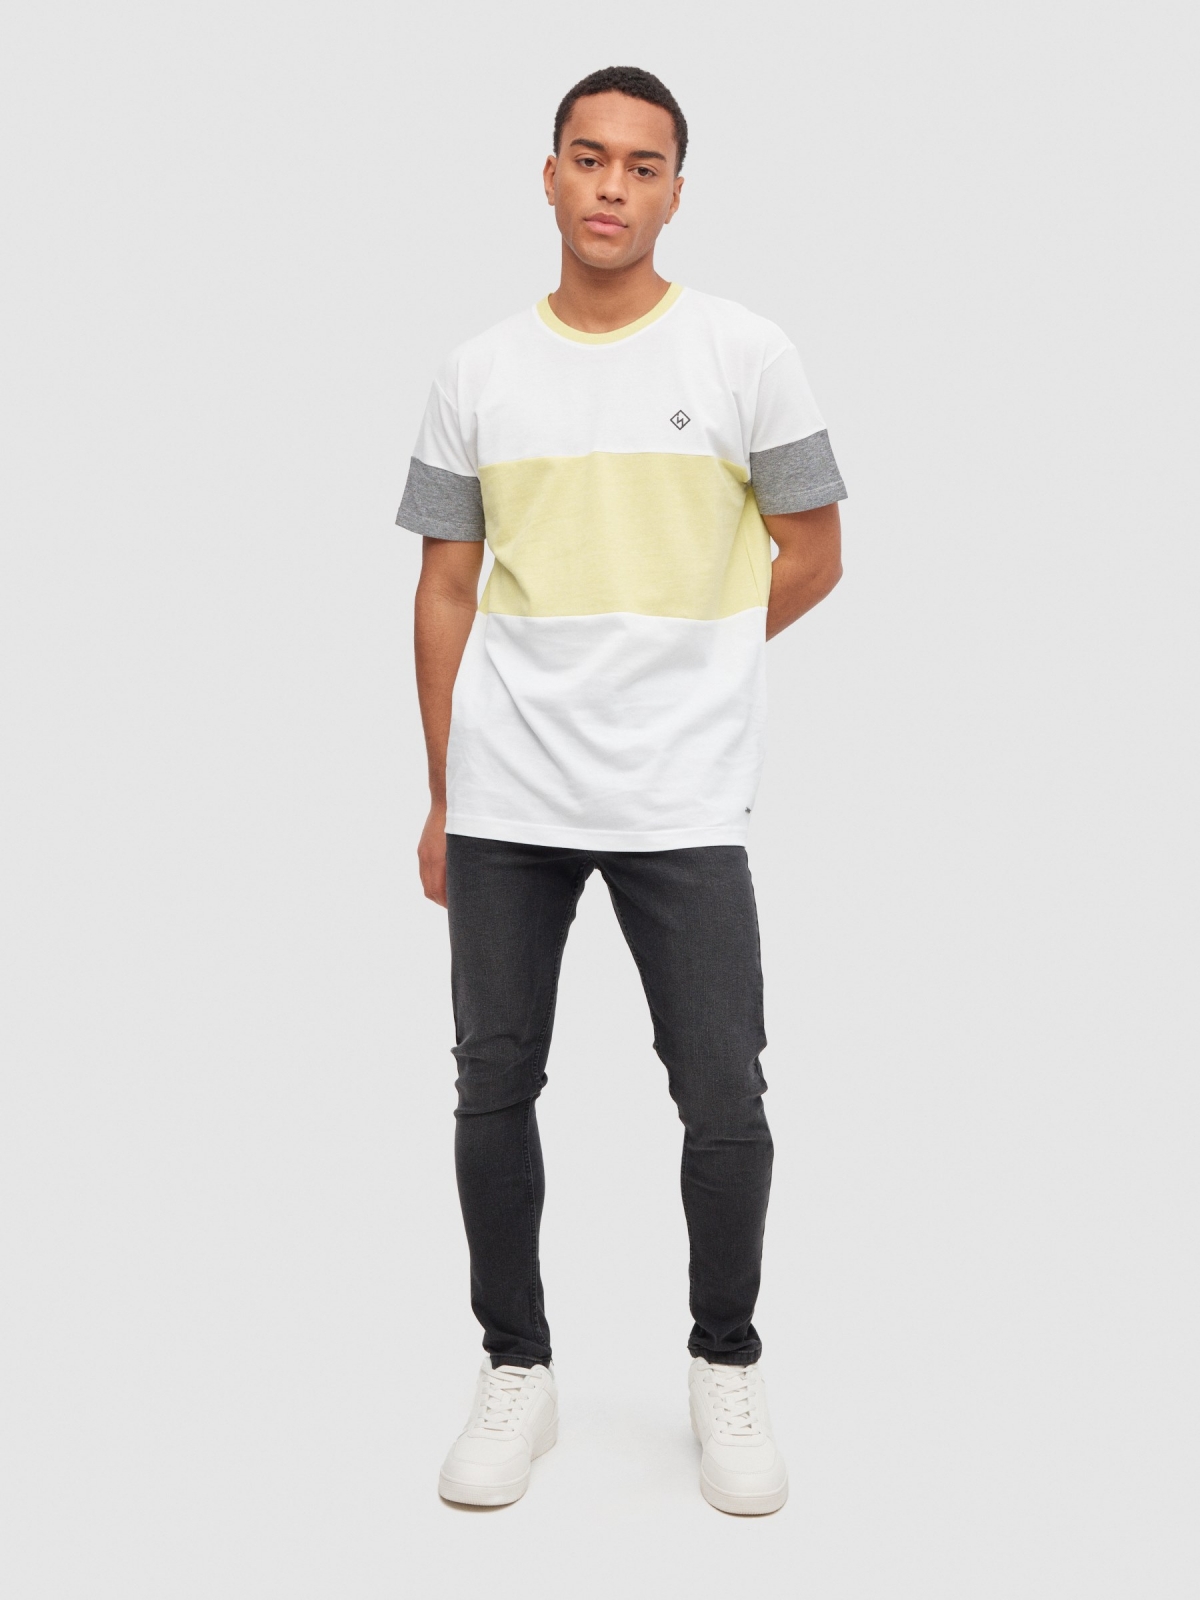 T-shirt bloco de cor branco vista geral frontal